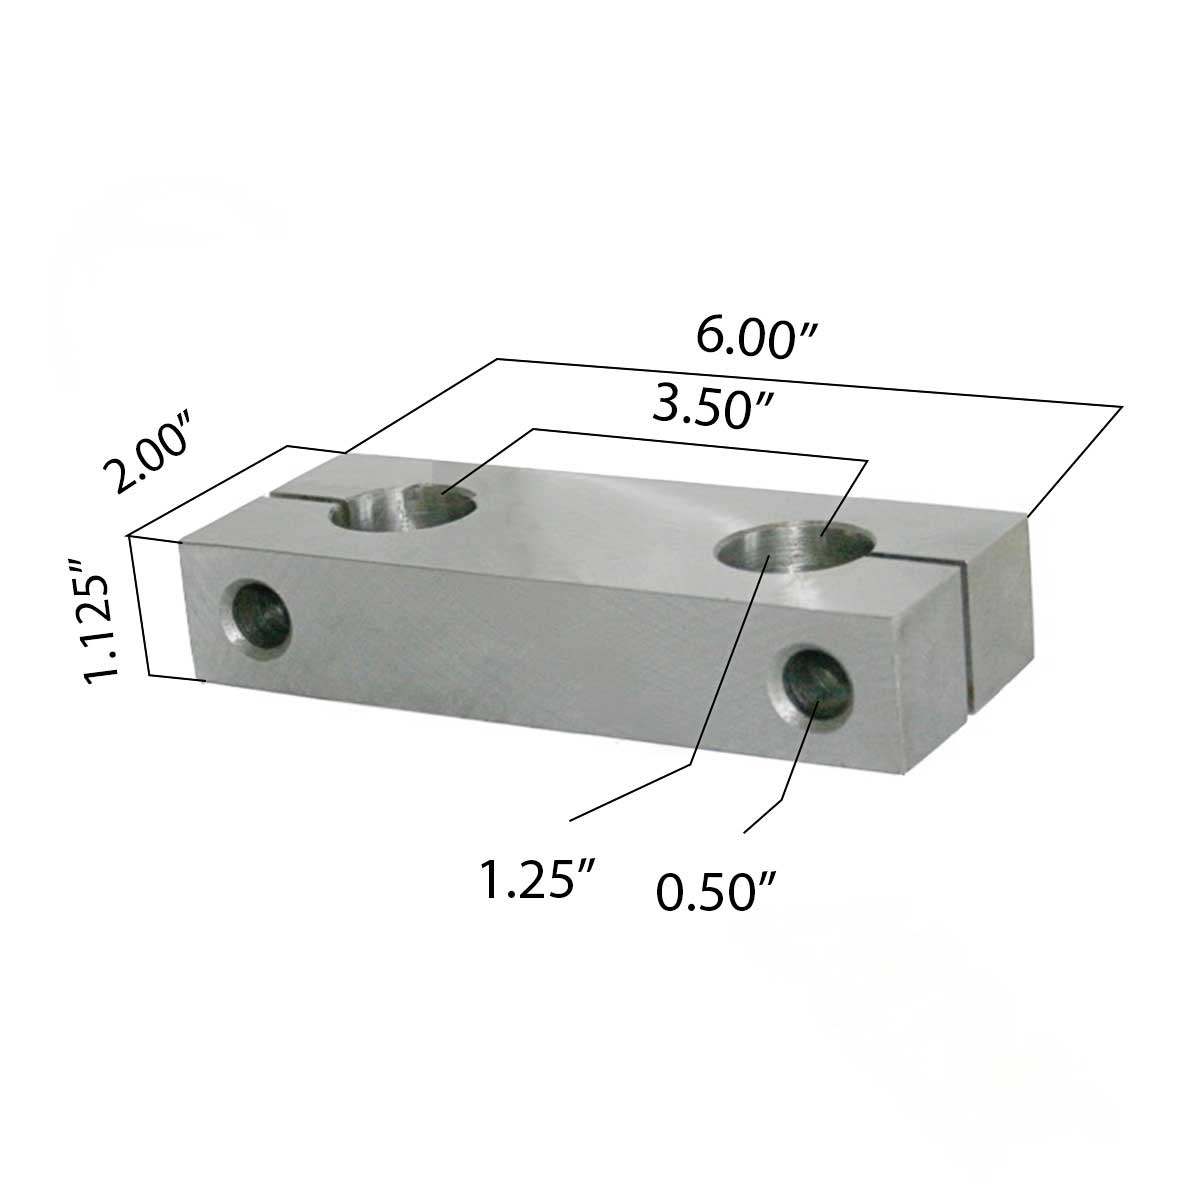 Peterbilt shackle side bar M1500 measurements.